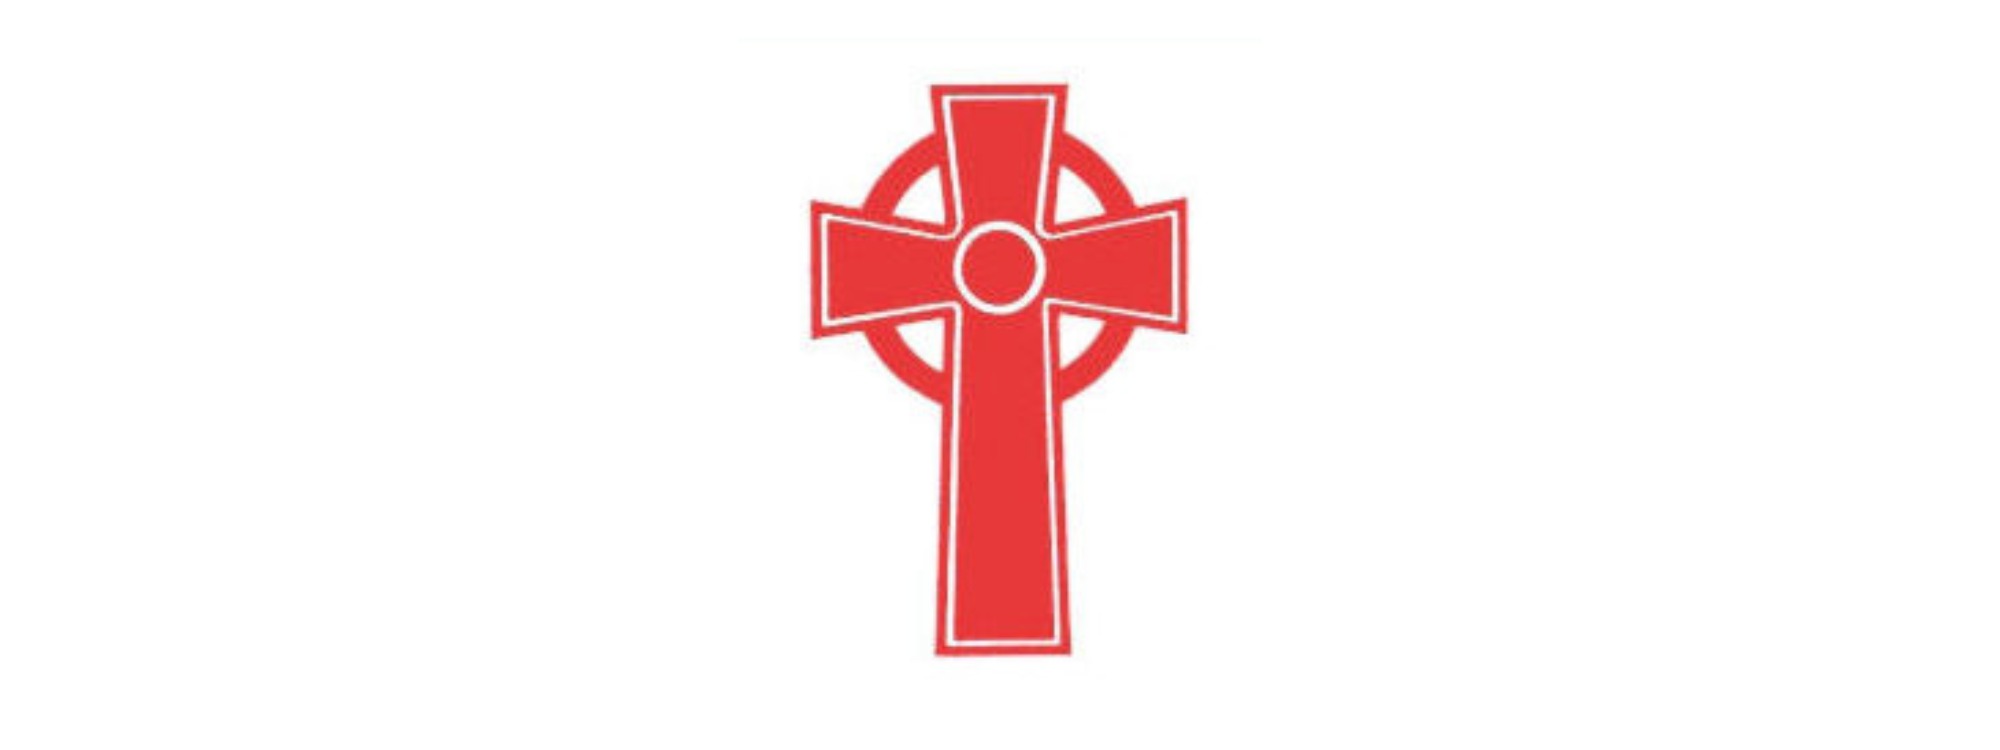 St marys school logo header